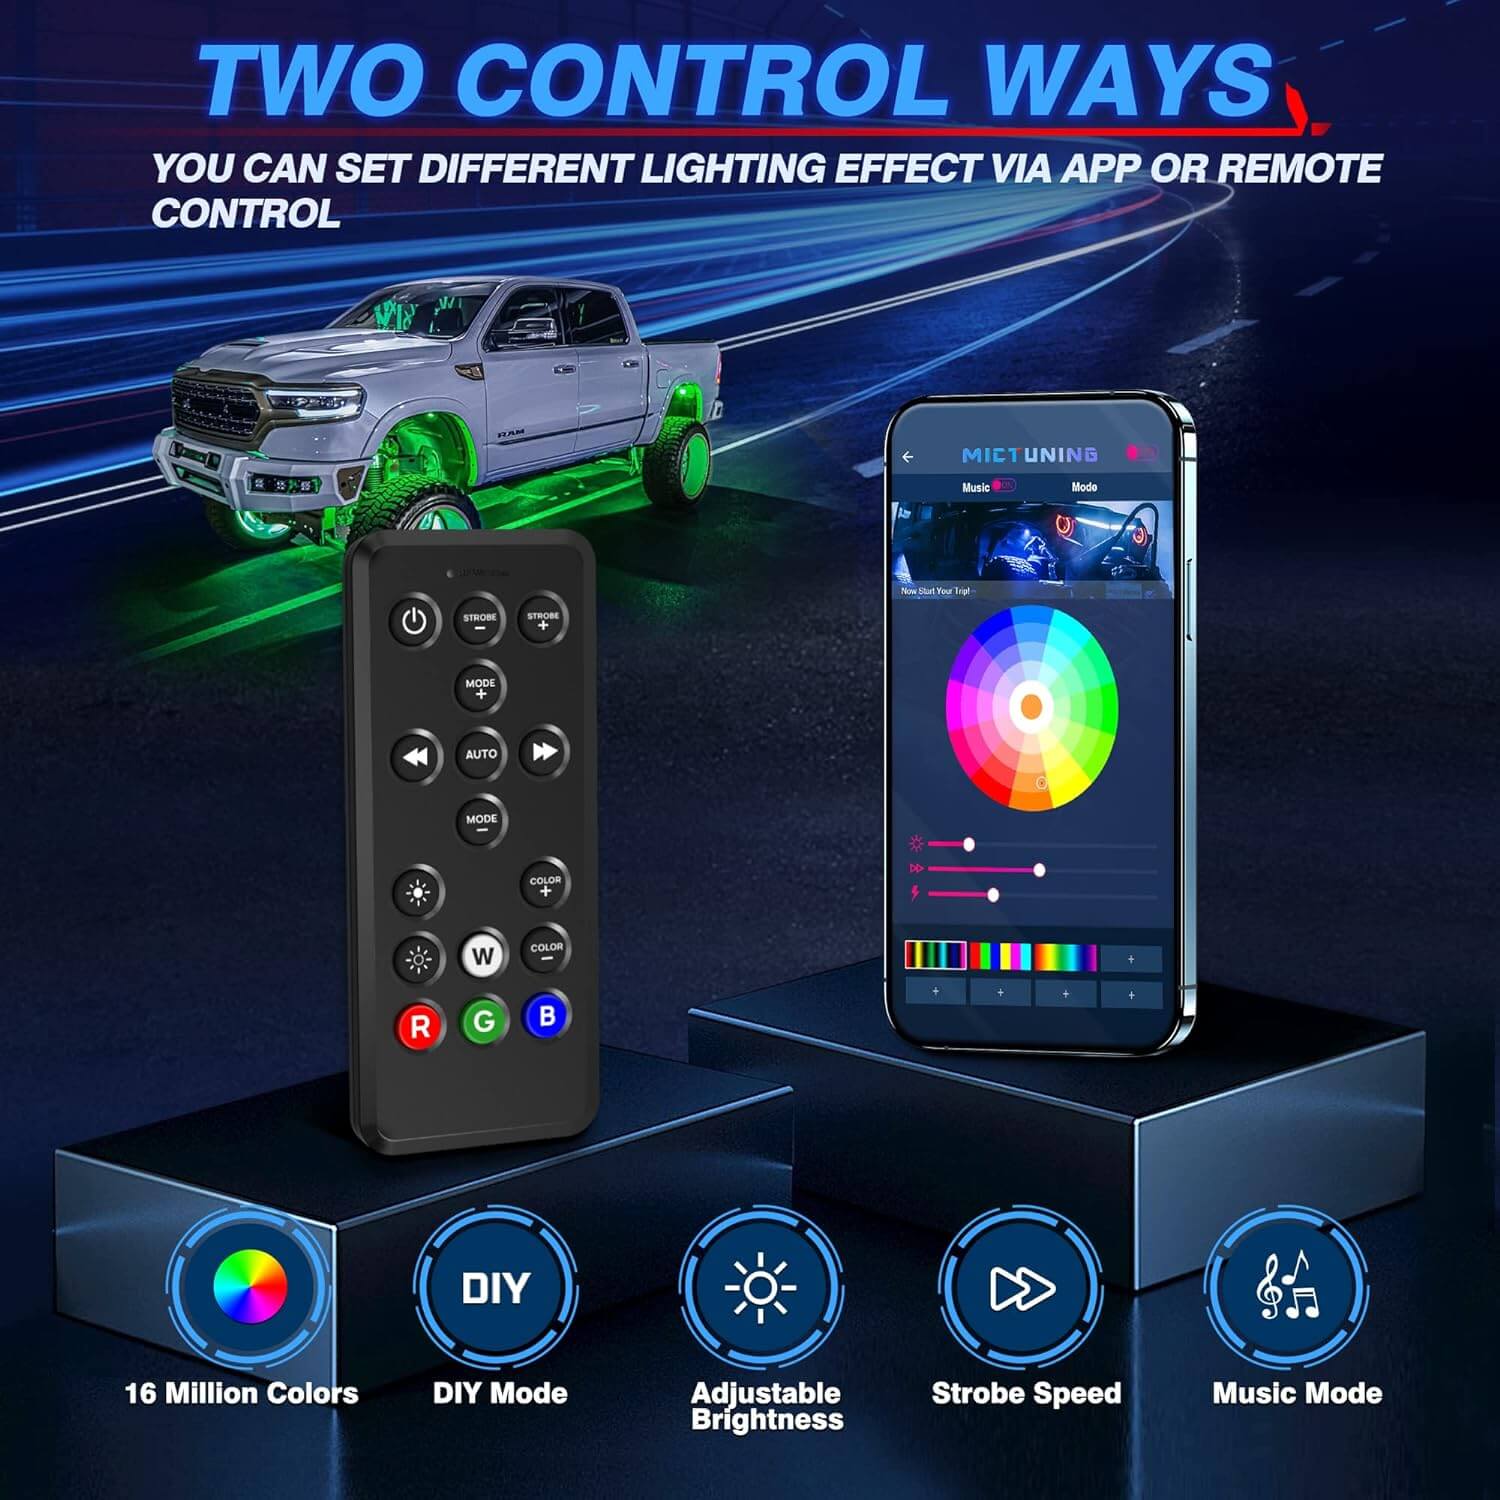 Q1 RGBW LED Rock Lights - 4 Pods Multicolor Neon LED Light Kit